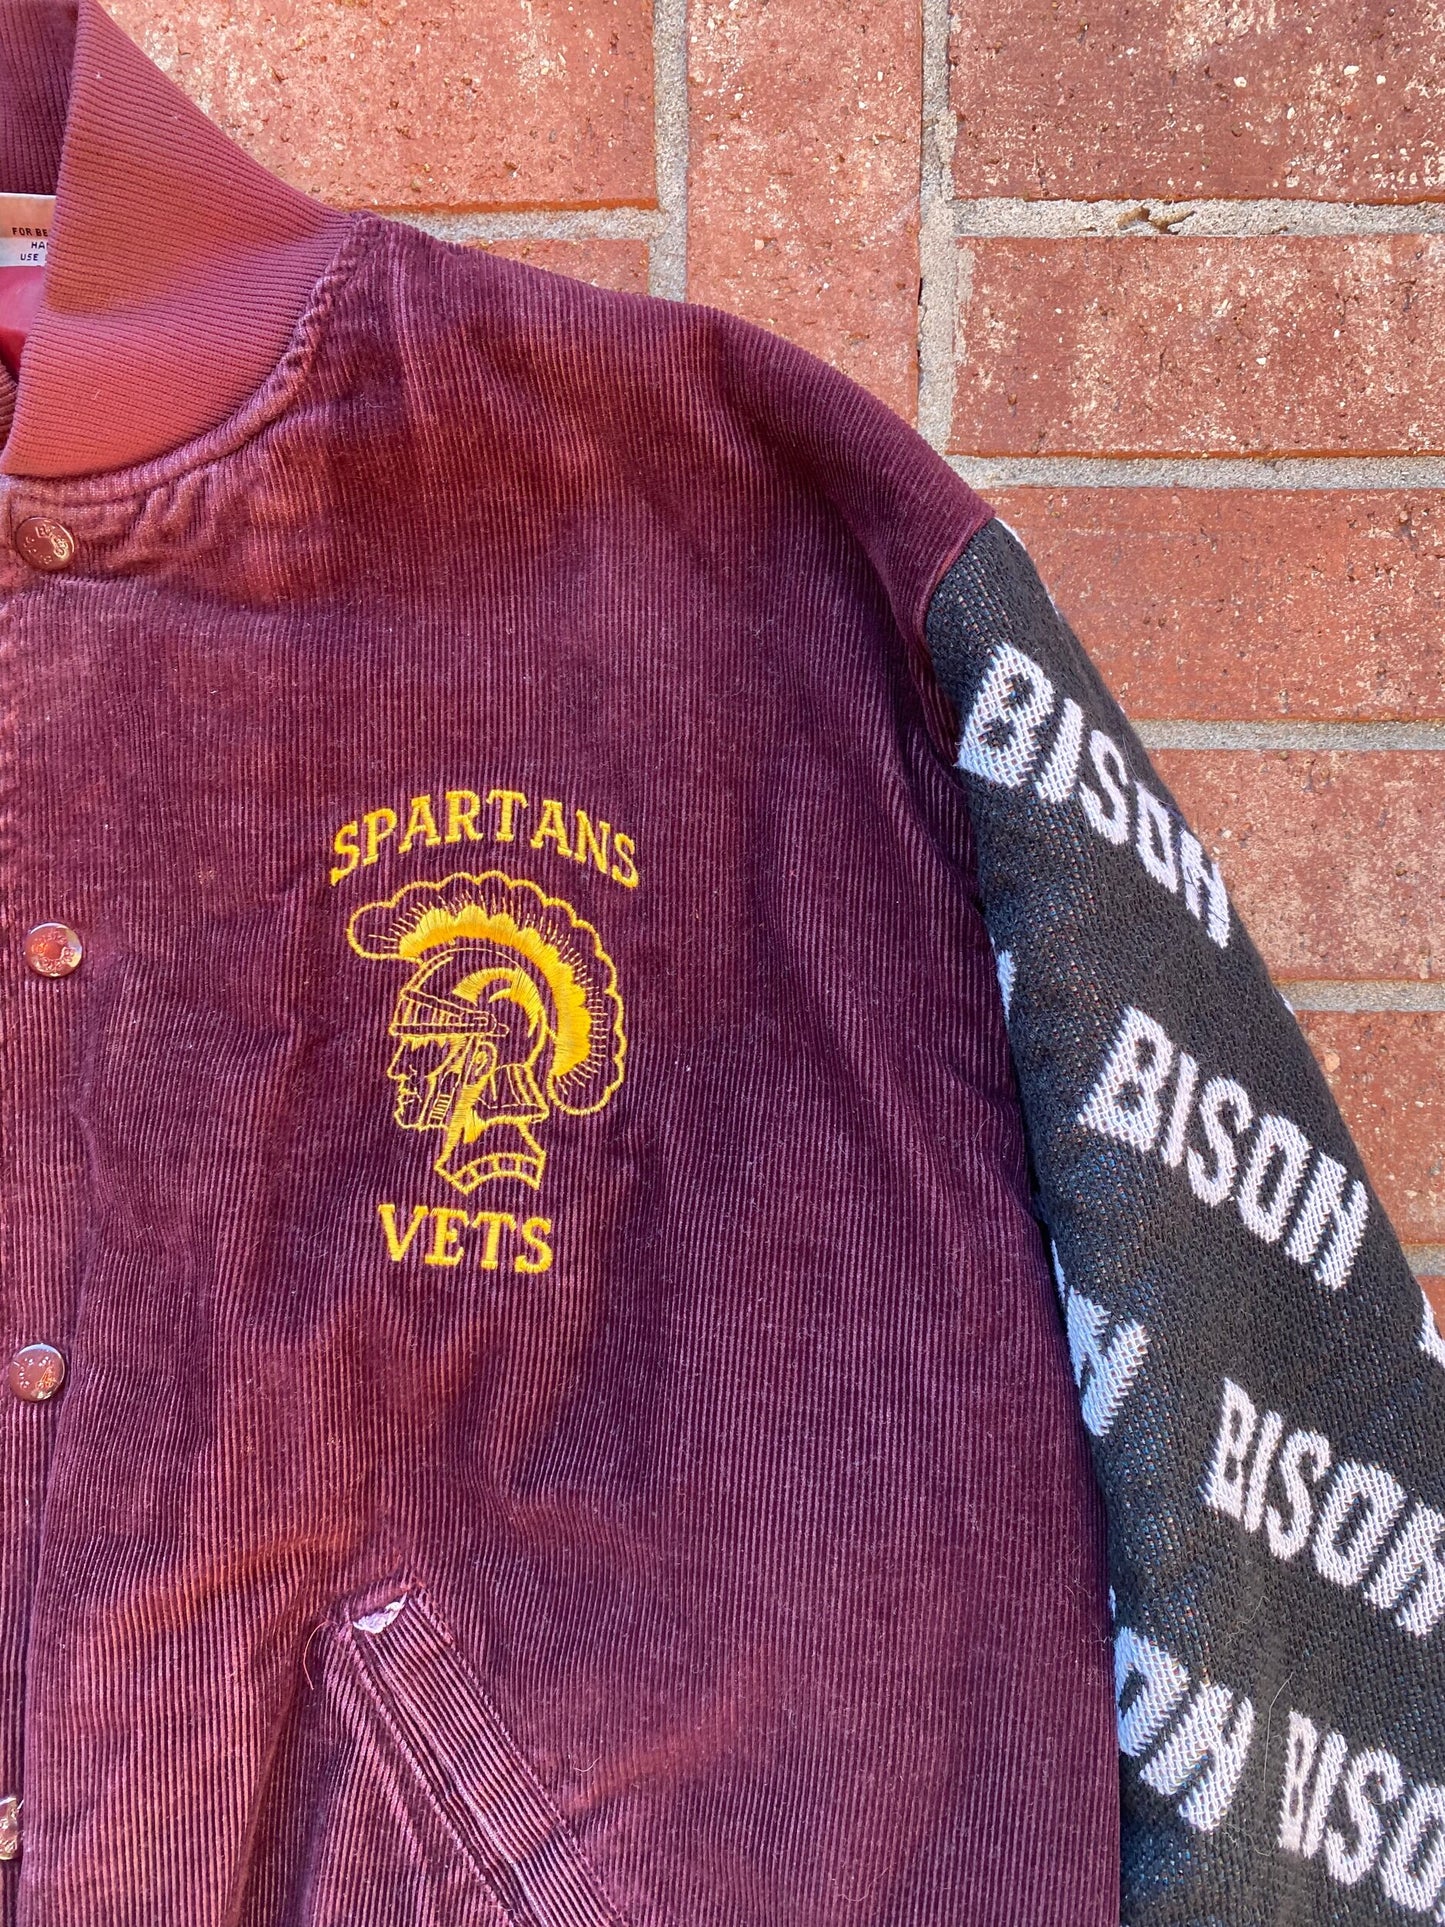 BISON Spartans Corduroy Varsity Jacket